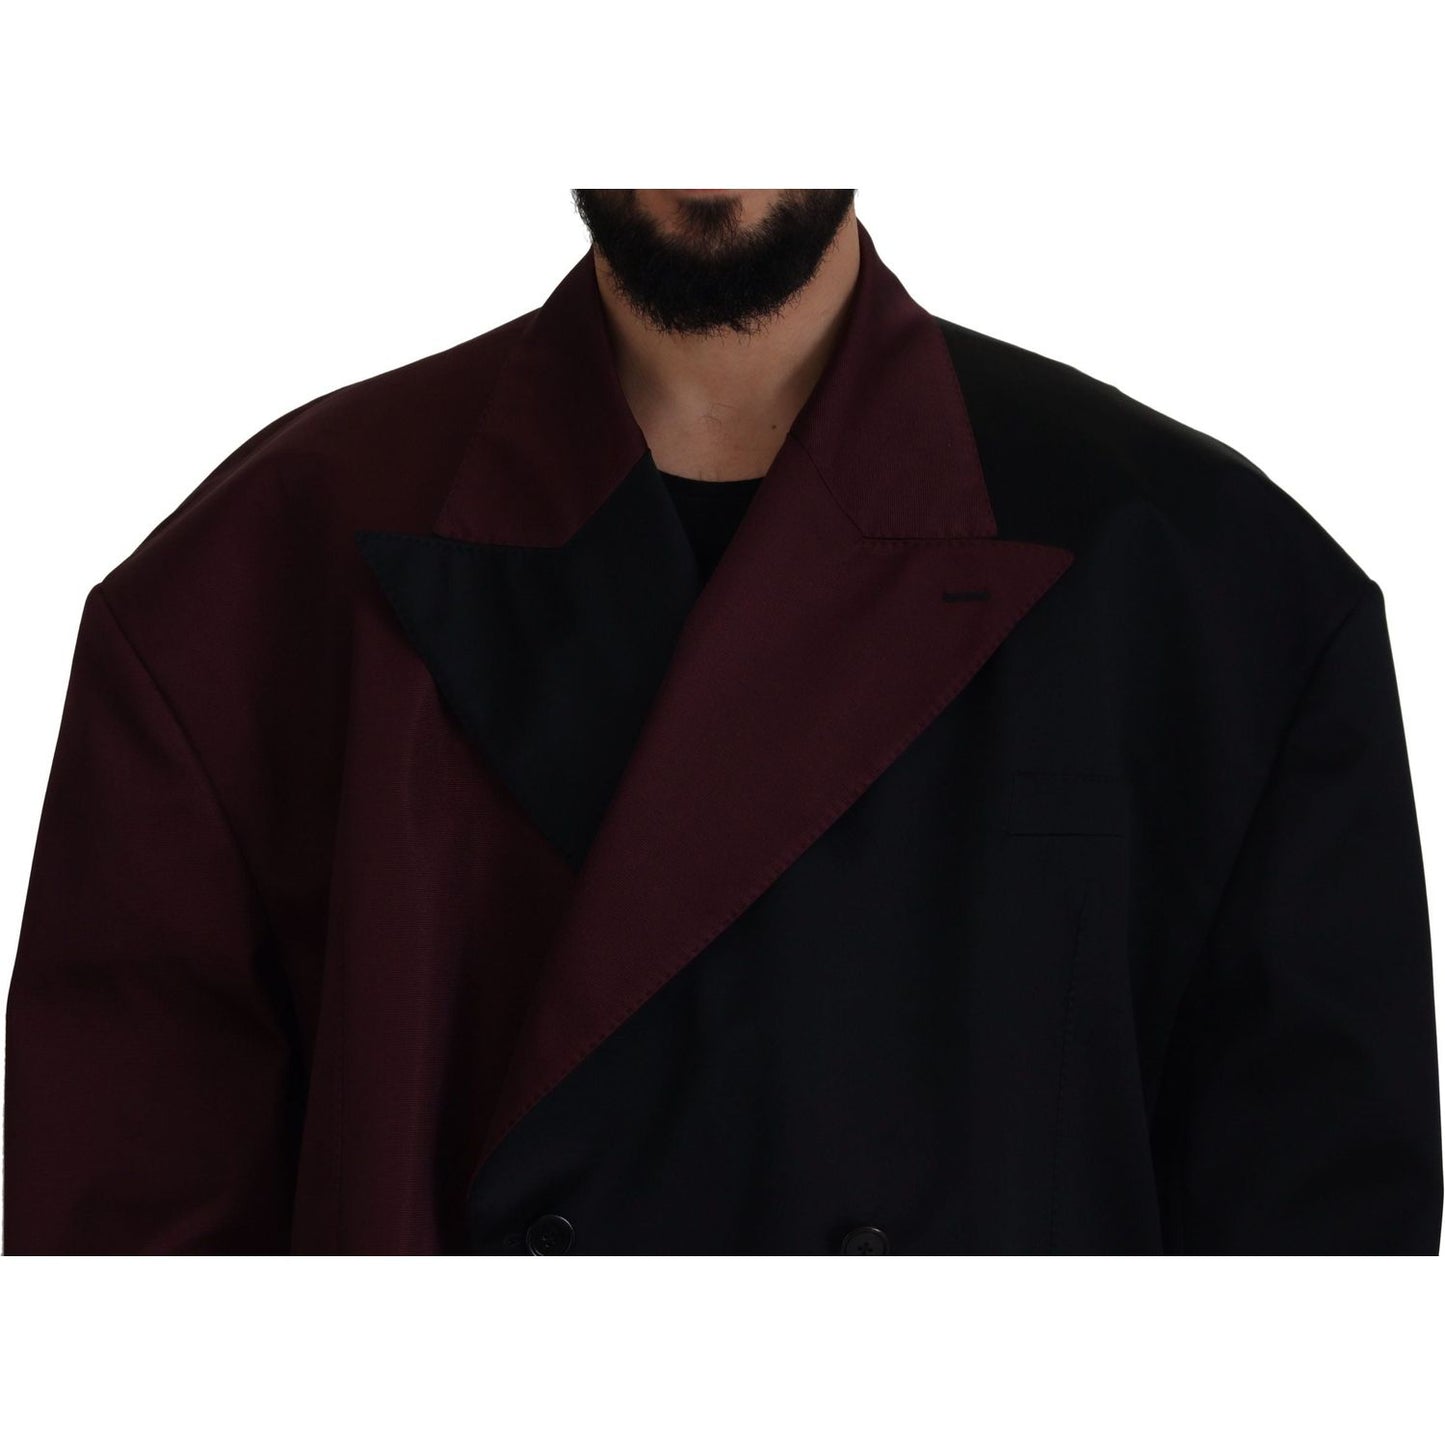 Dolce & Gabbana Elegant Bordeaux Double-Breasted Jacket bordeaux-polyester-double-breasted-jacket IMG_8665-scaled-6e31b5e8-da8.jpg